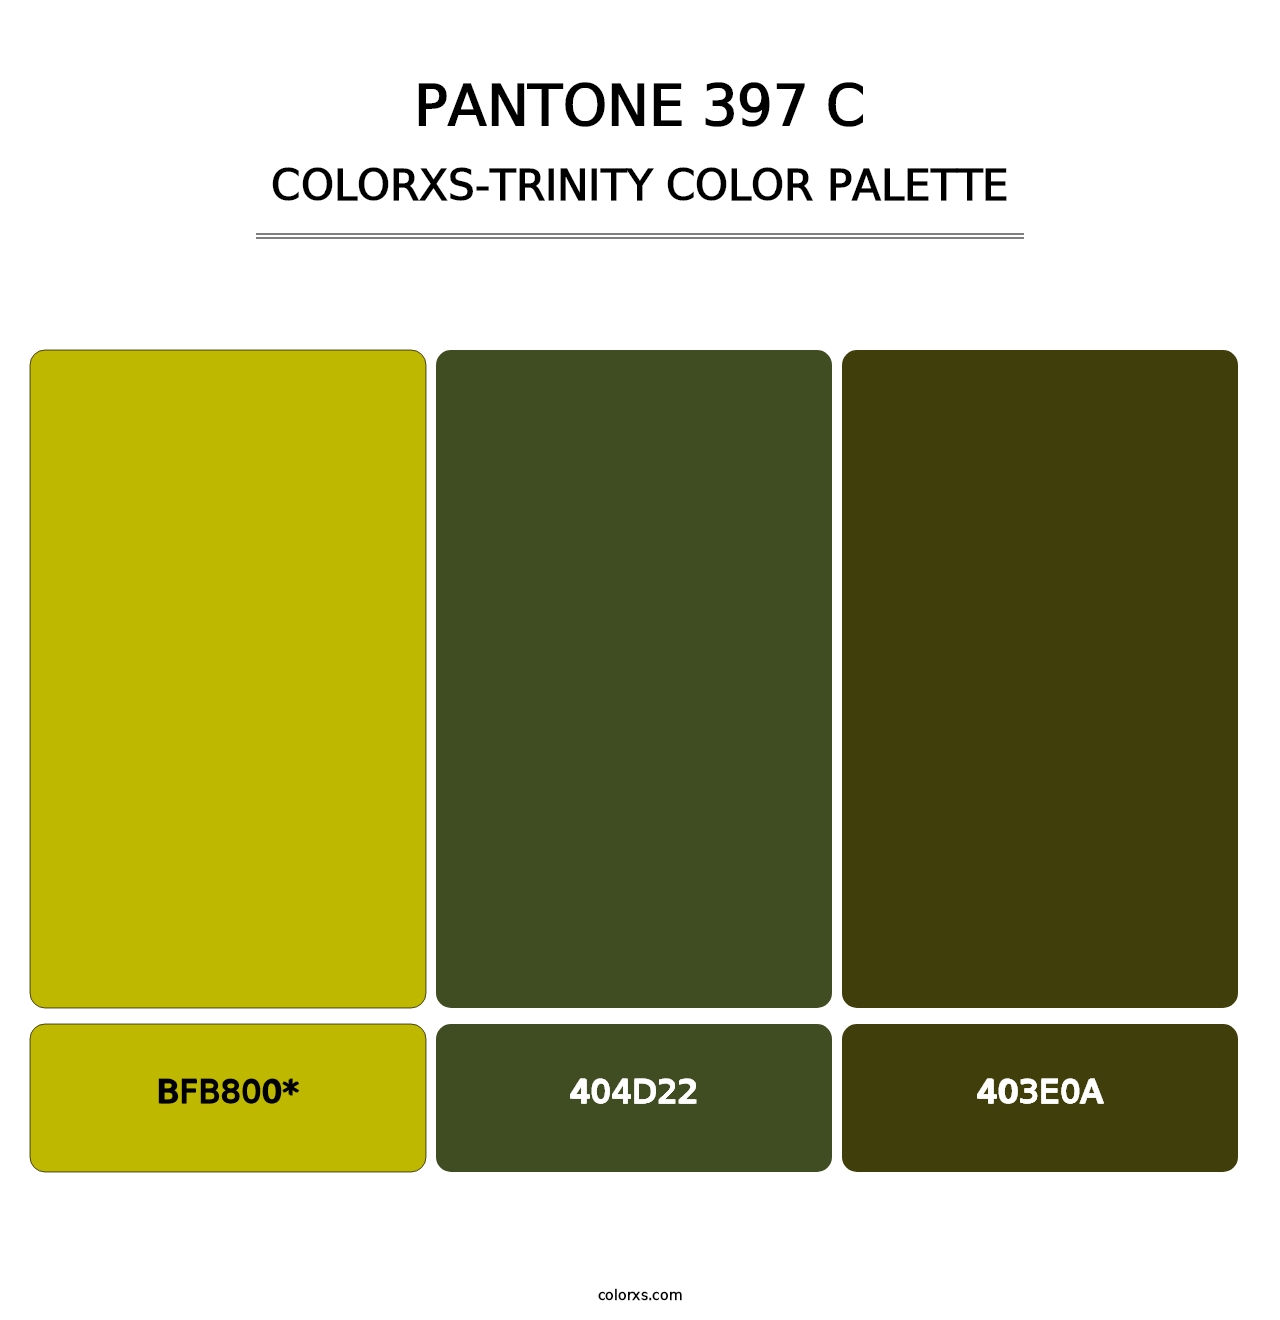 PANTONE 397 C - Colorxs Trinity Palette